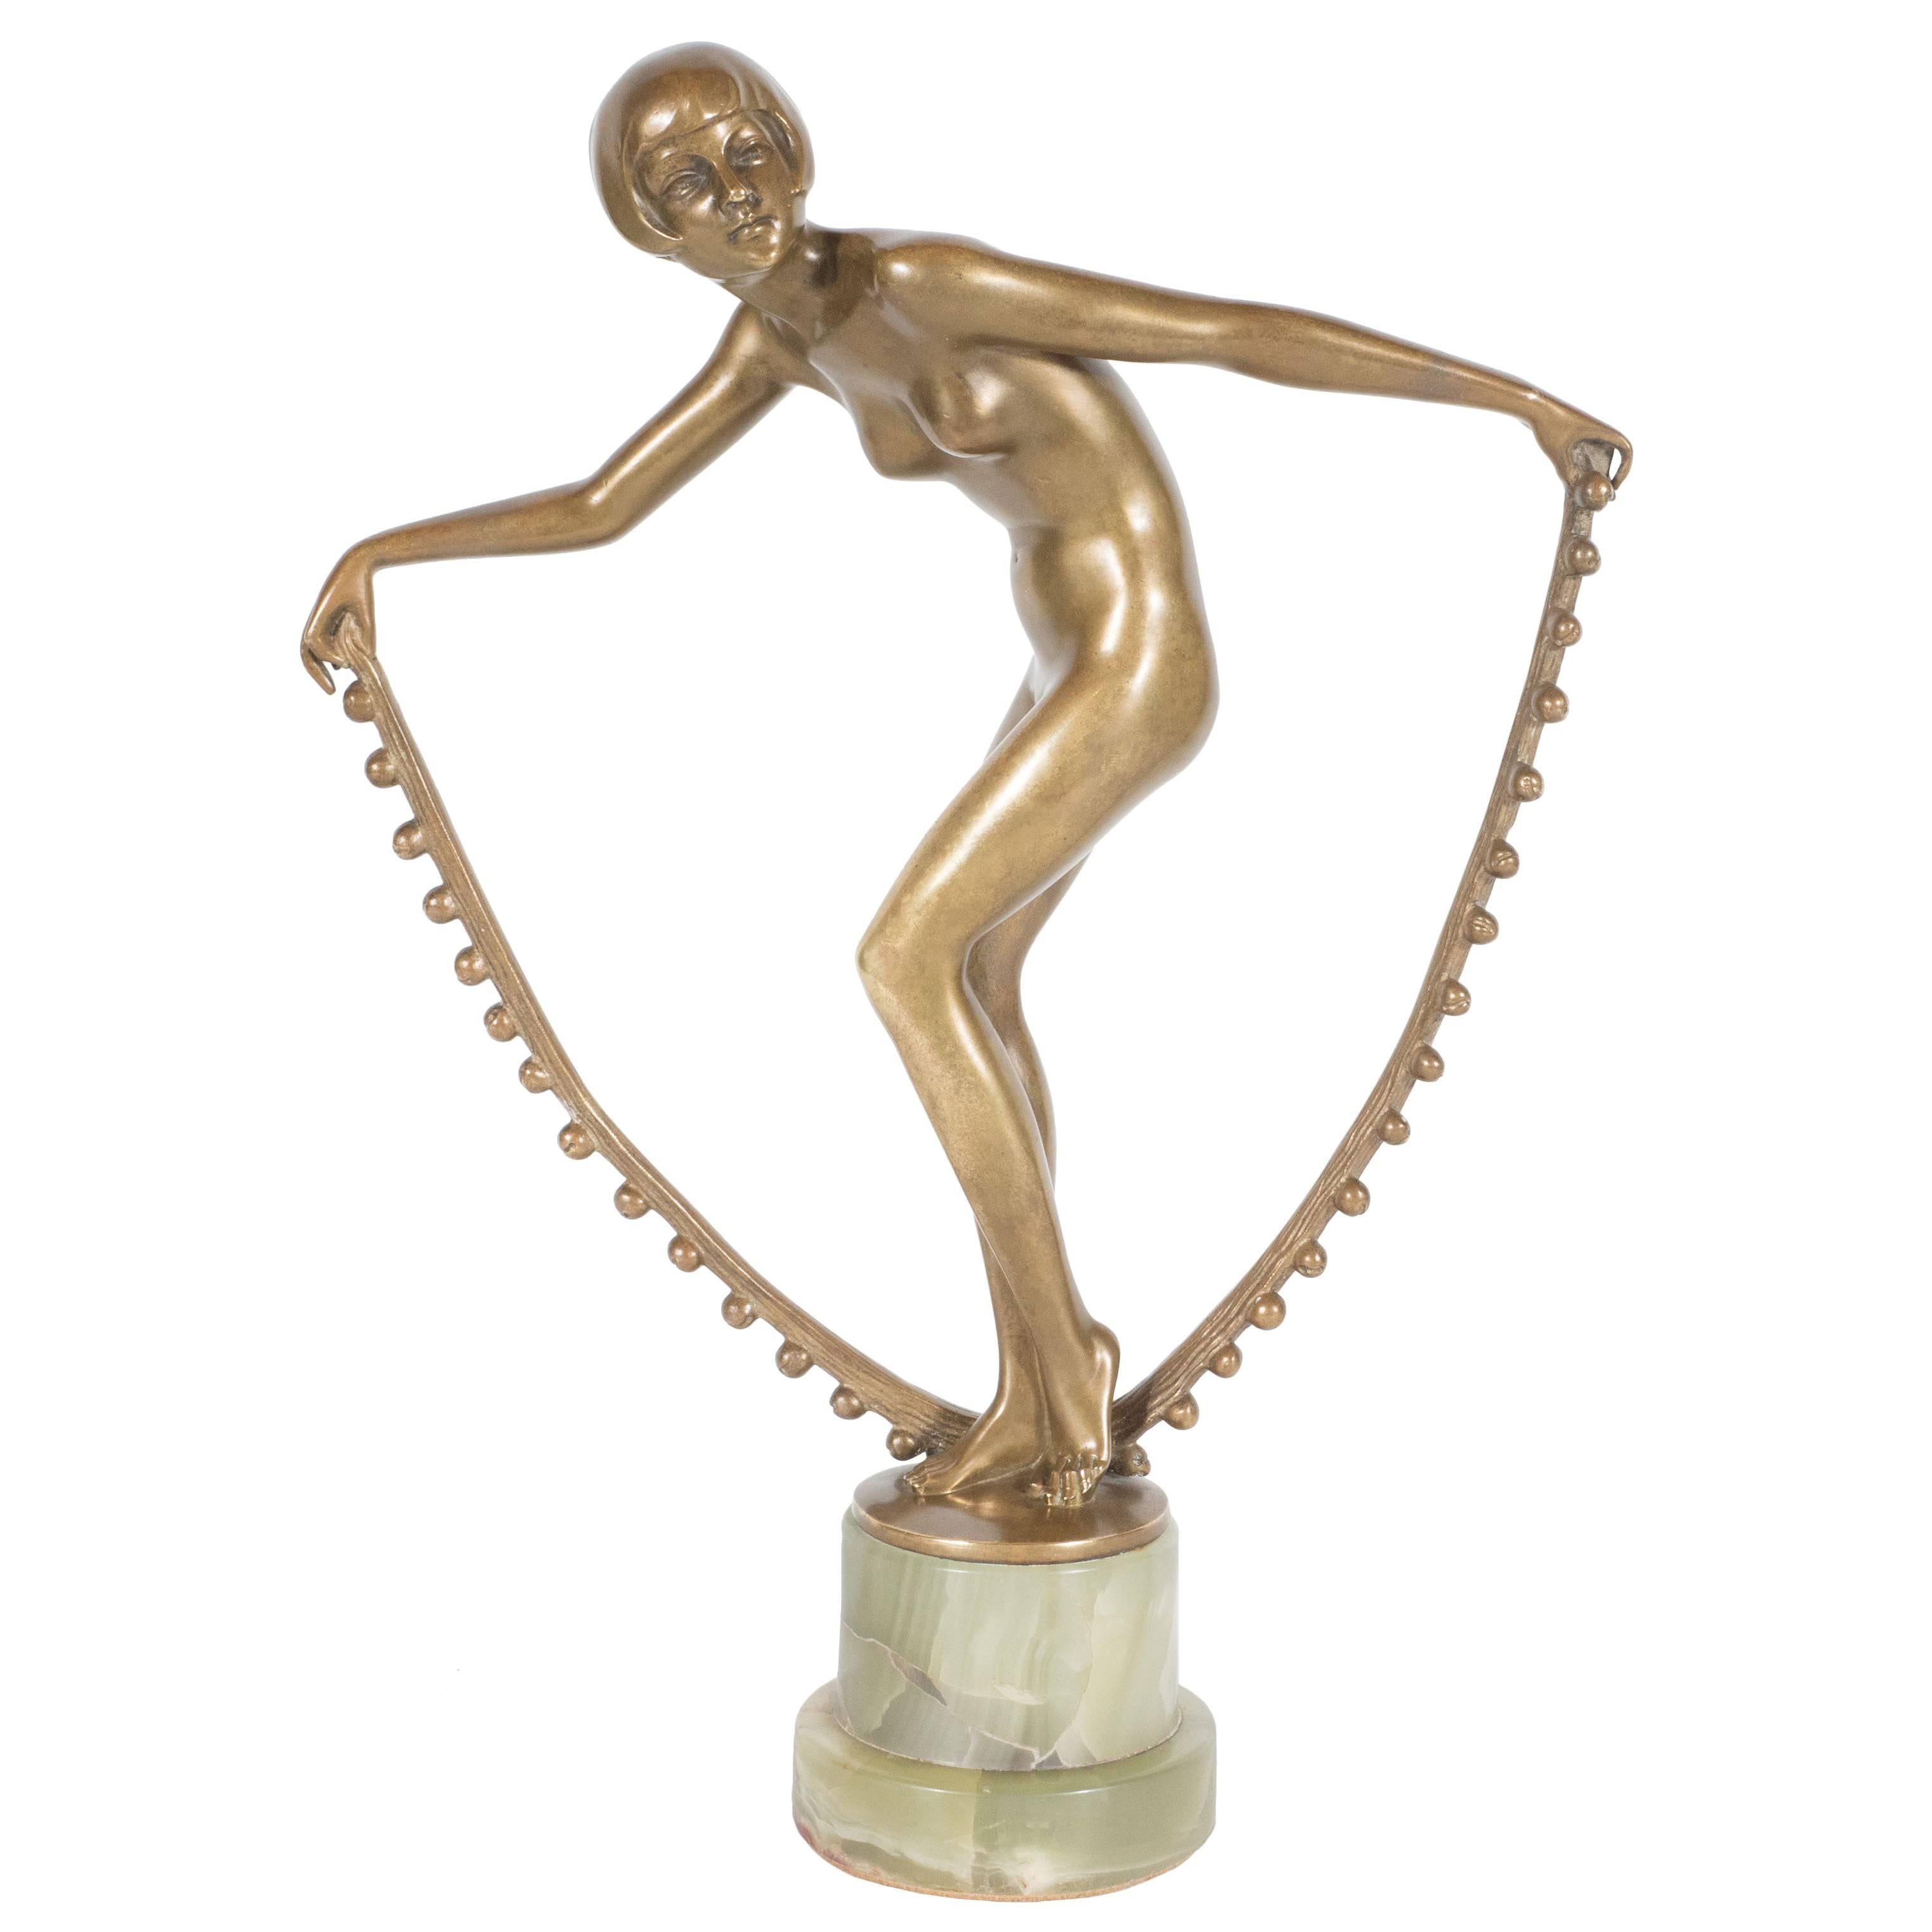 Deco Dancer by Josef Lorenzl Gilt Bronze Sculpture on Onyx Base, Austrian, 1935